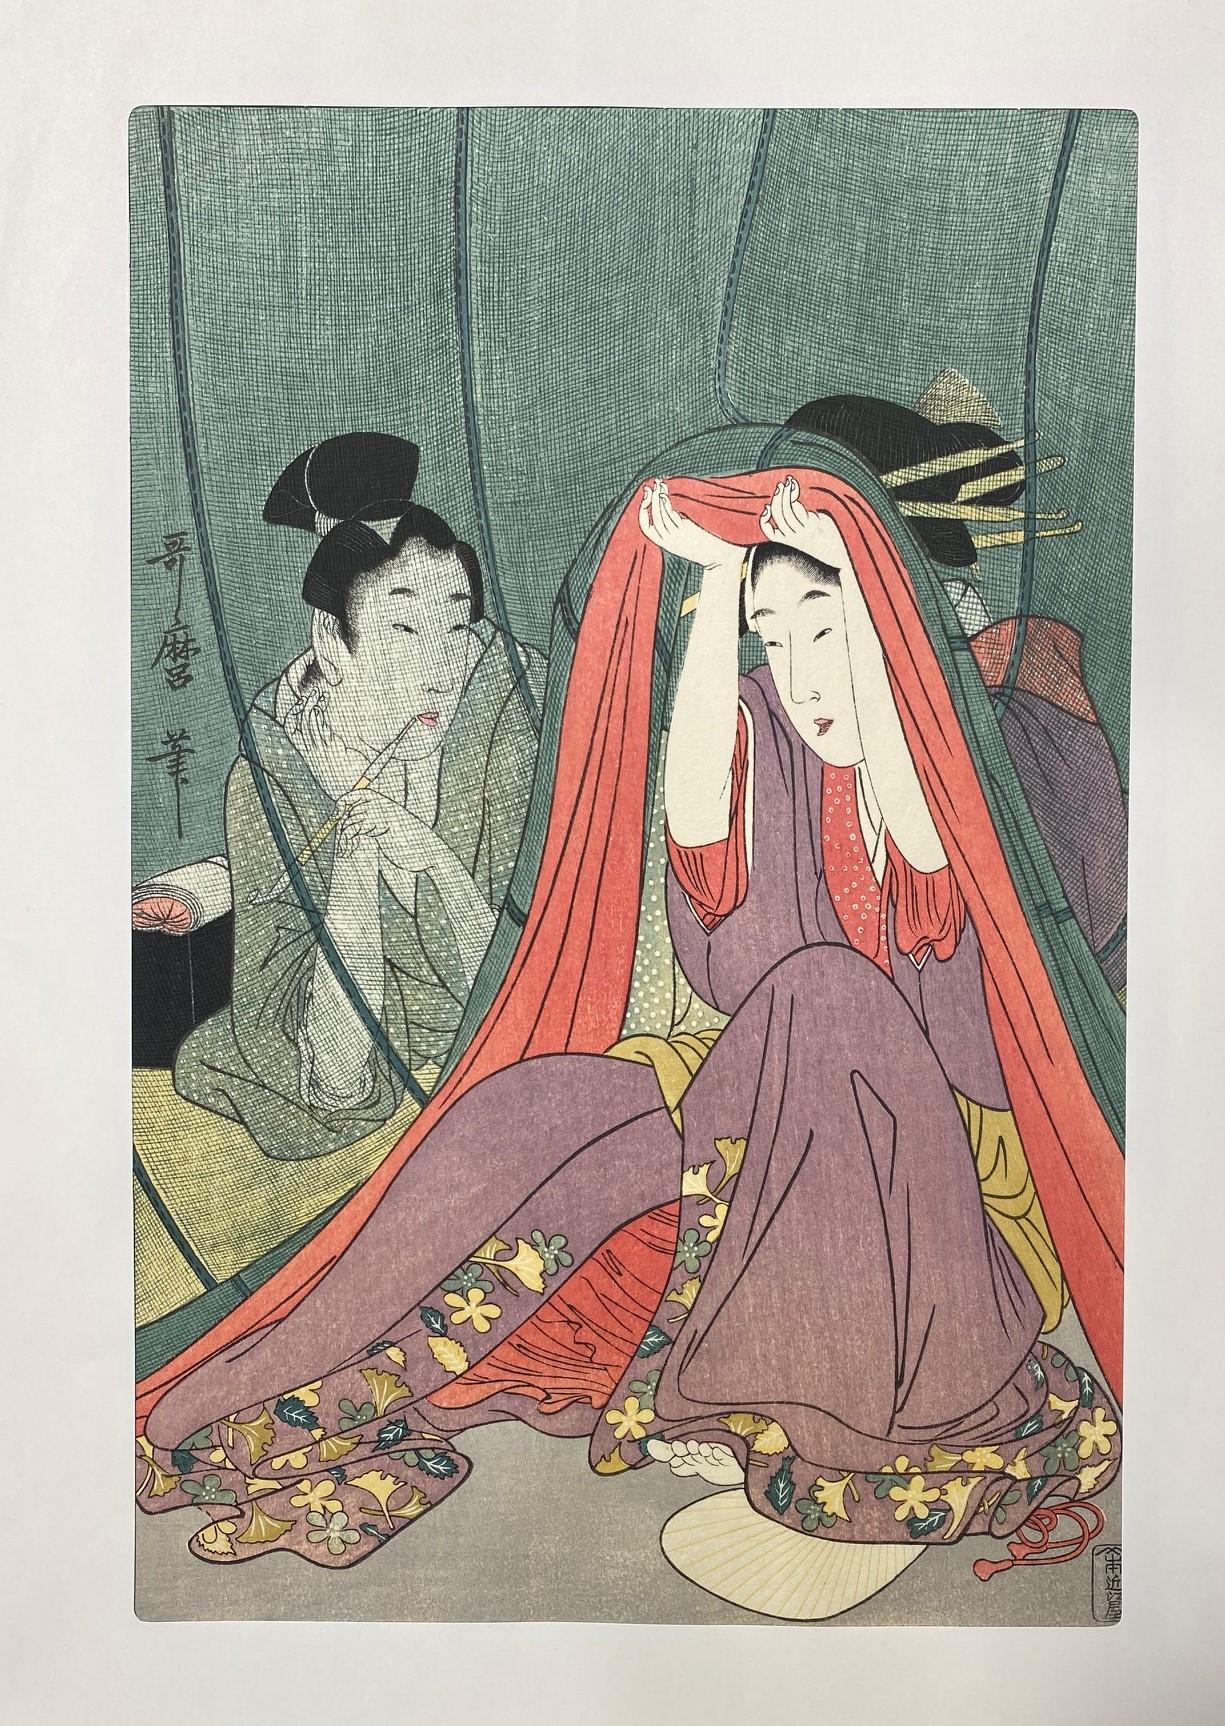 how is kitagawa utamaro's a pair of lovers characteristic of ukiyo-e prints